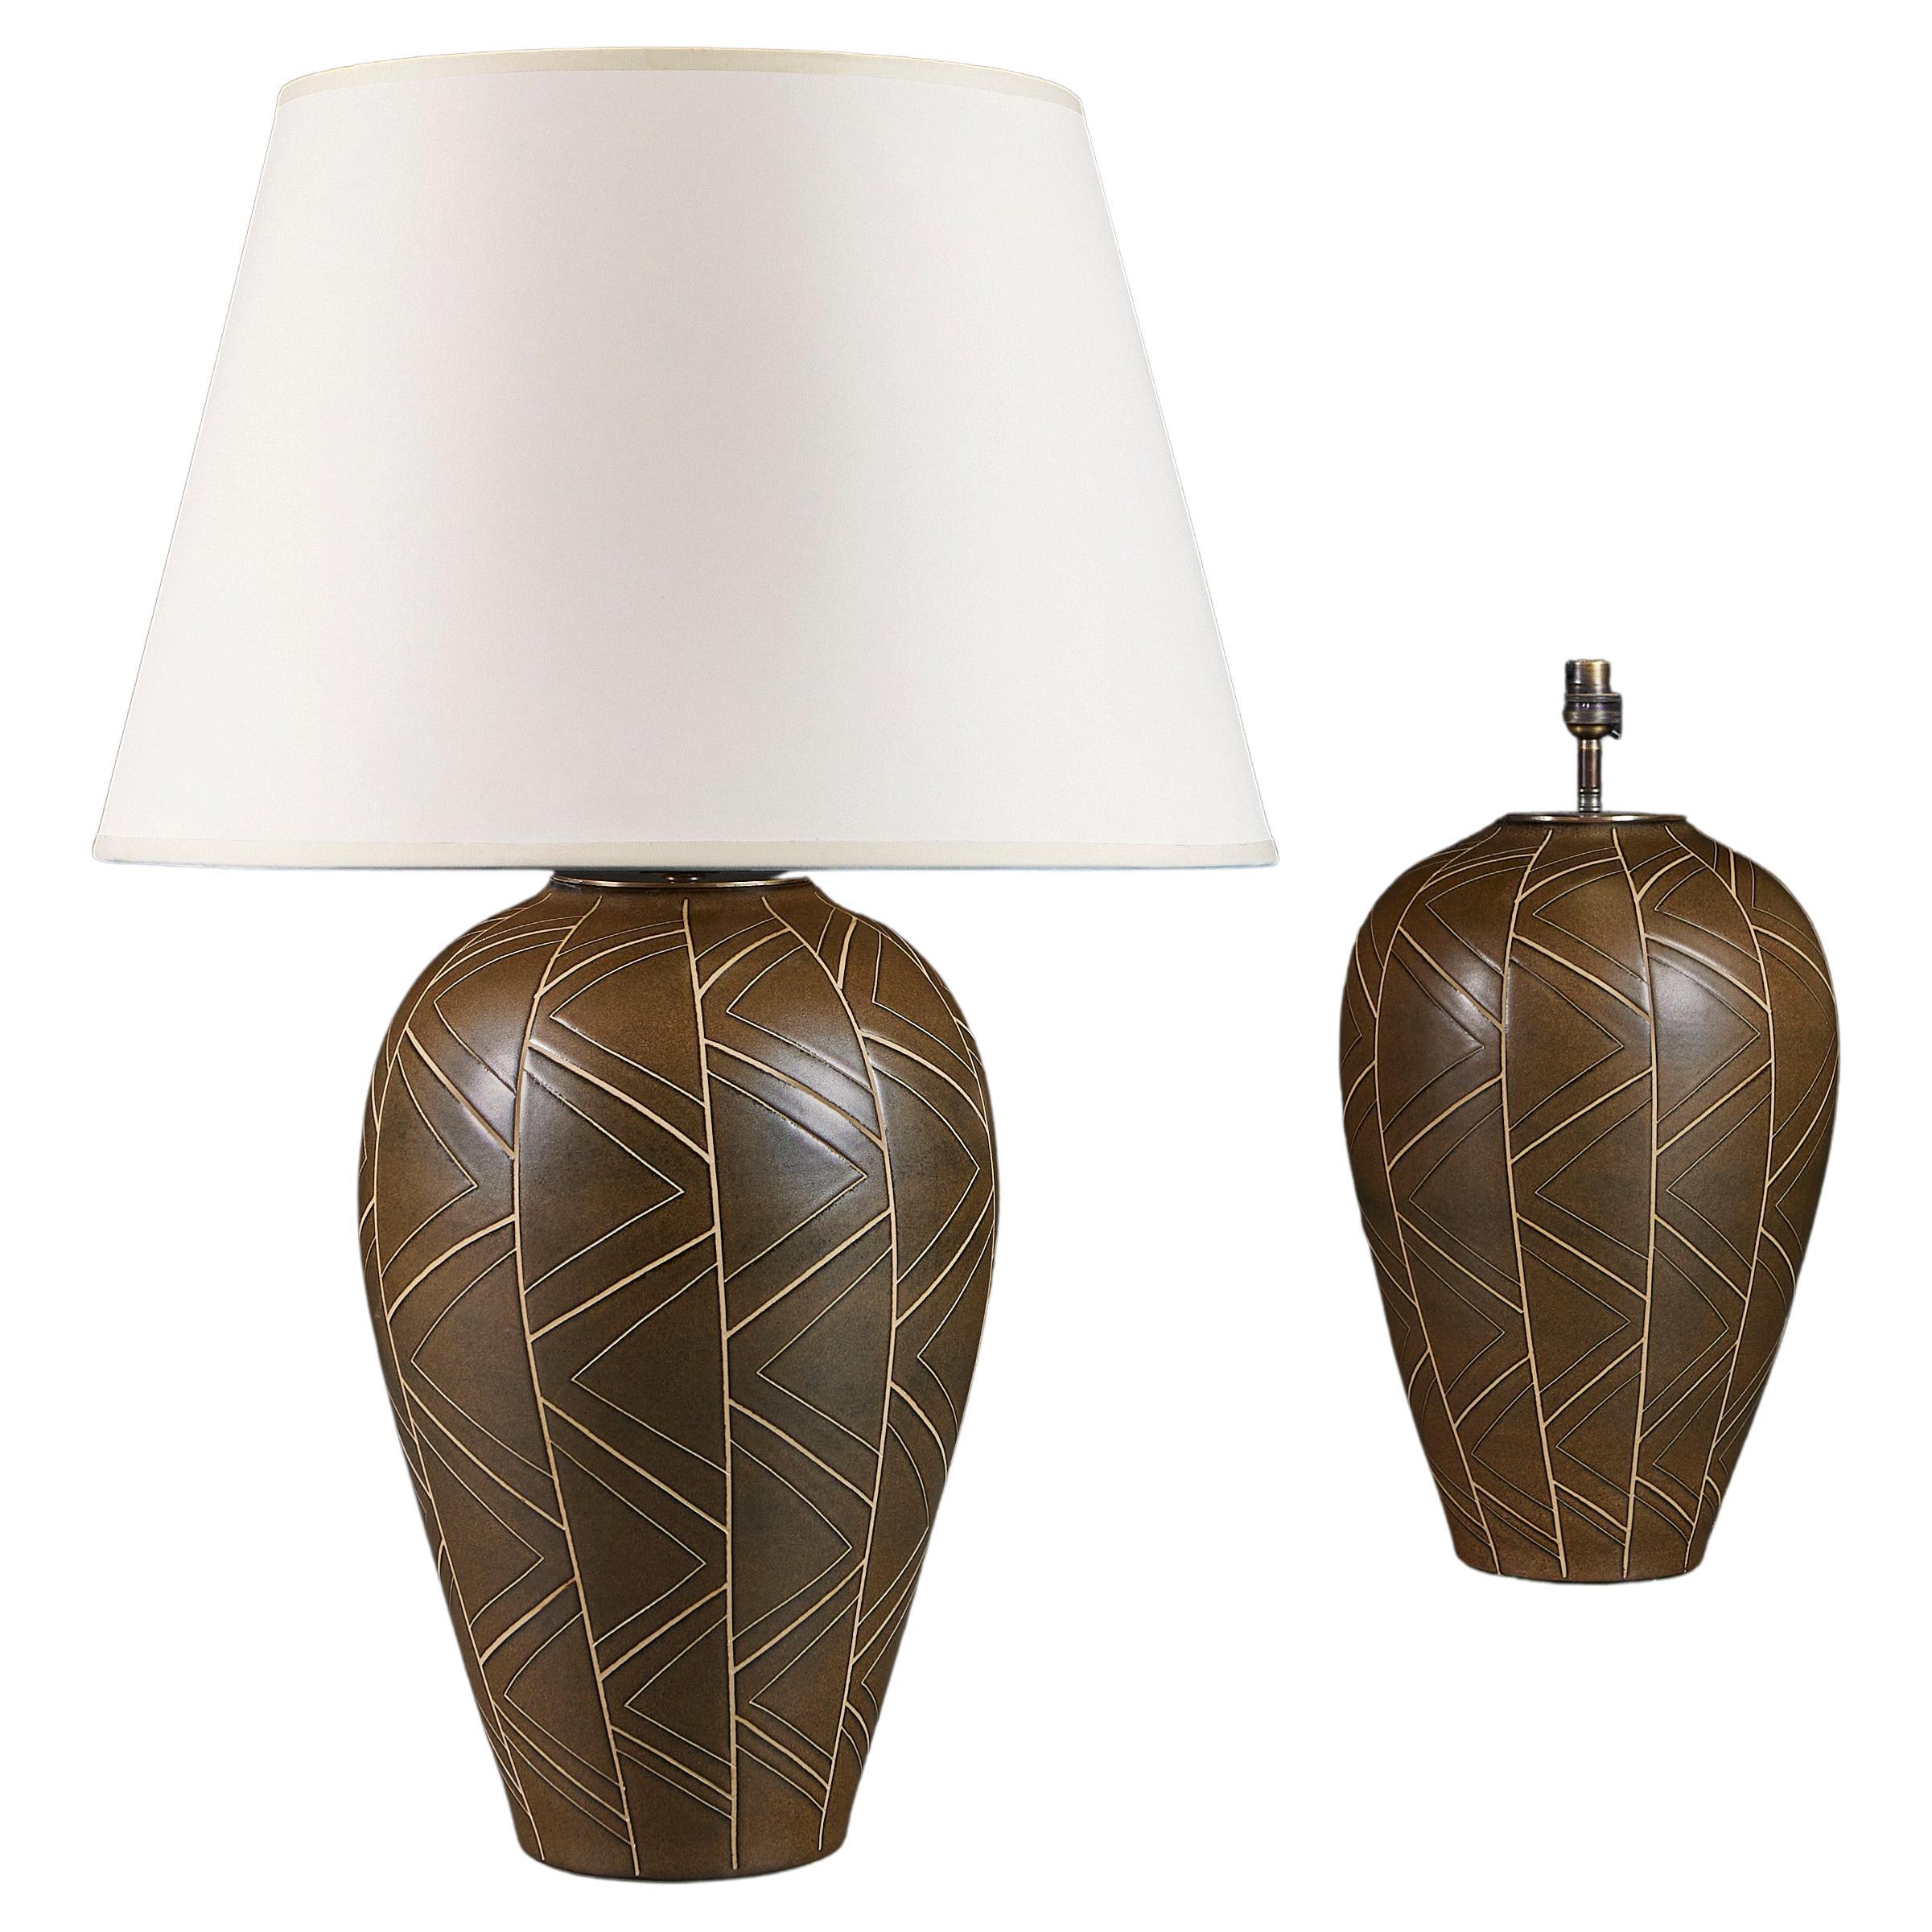 Pair of Geometric Sgraffito Art Pottery Lamps